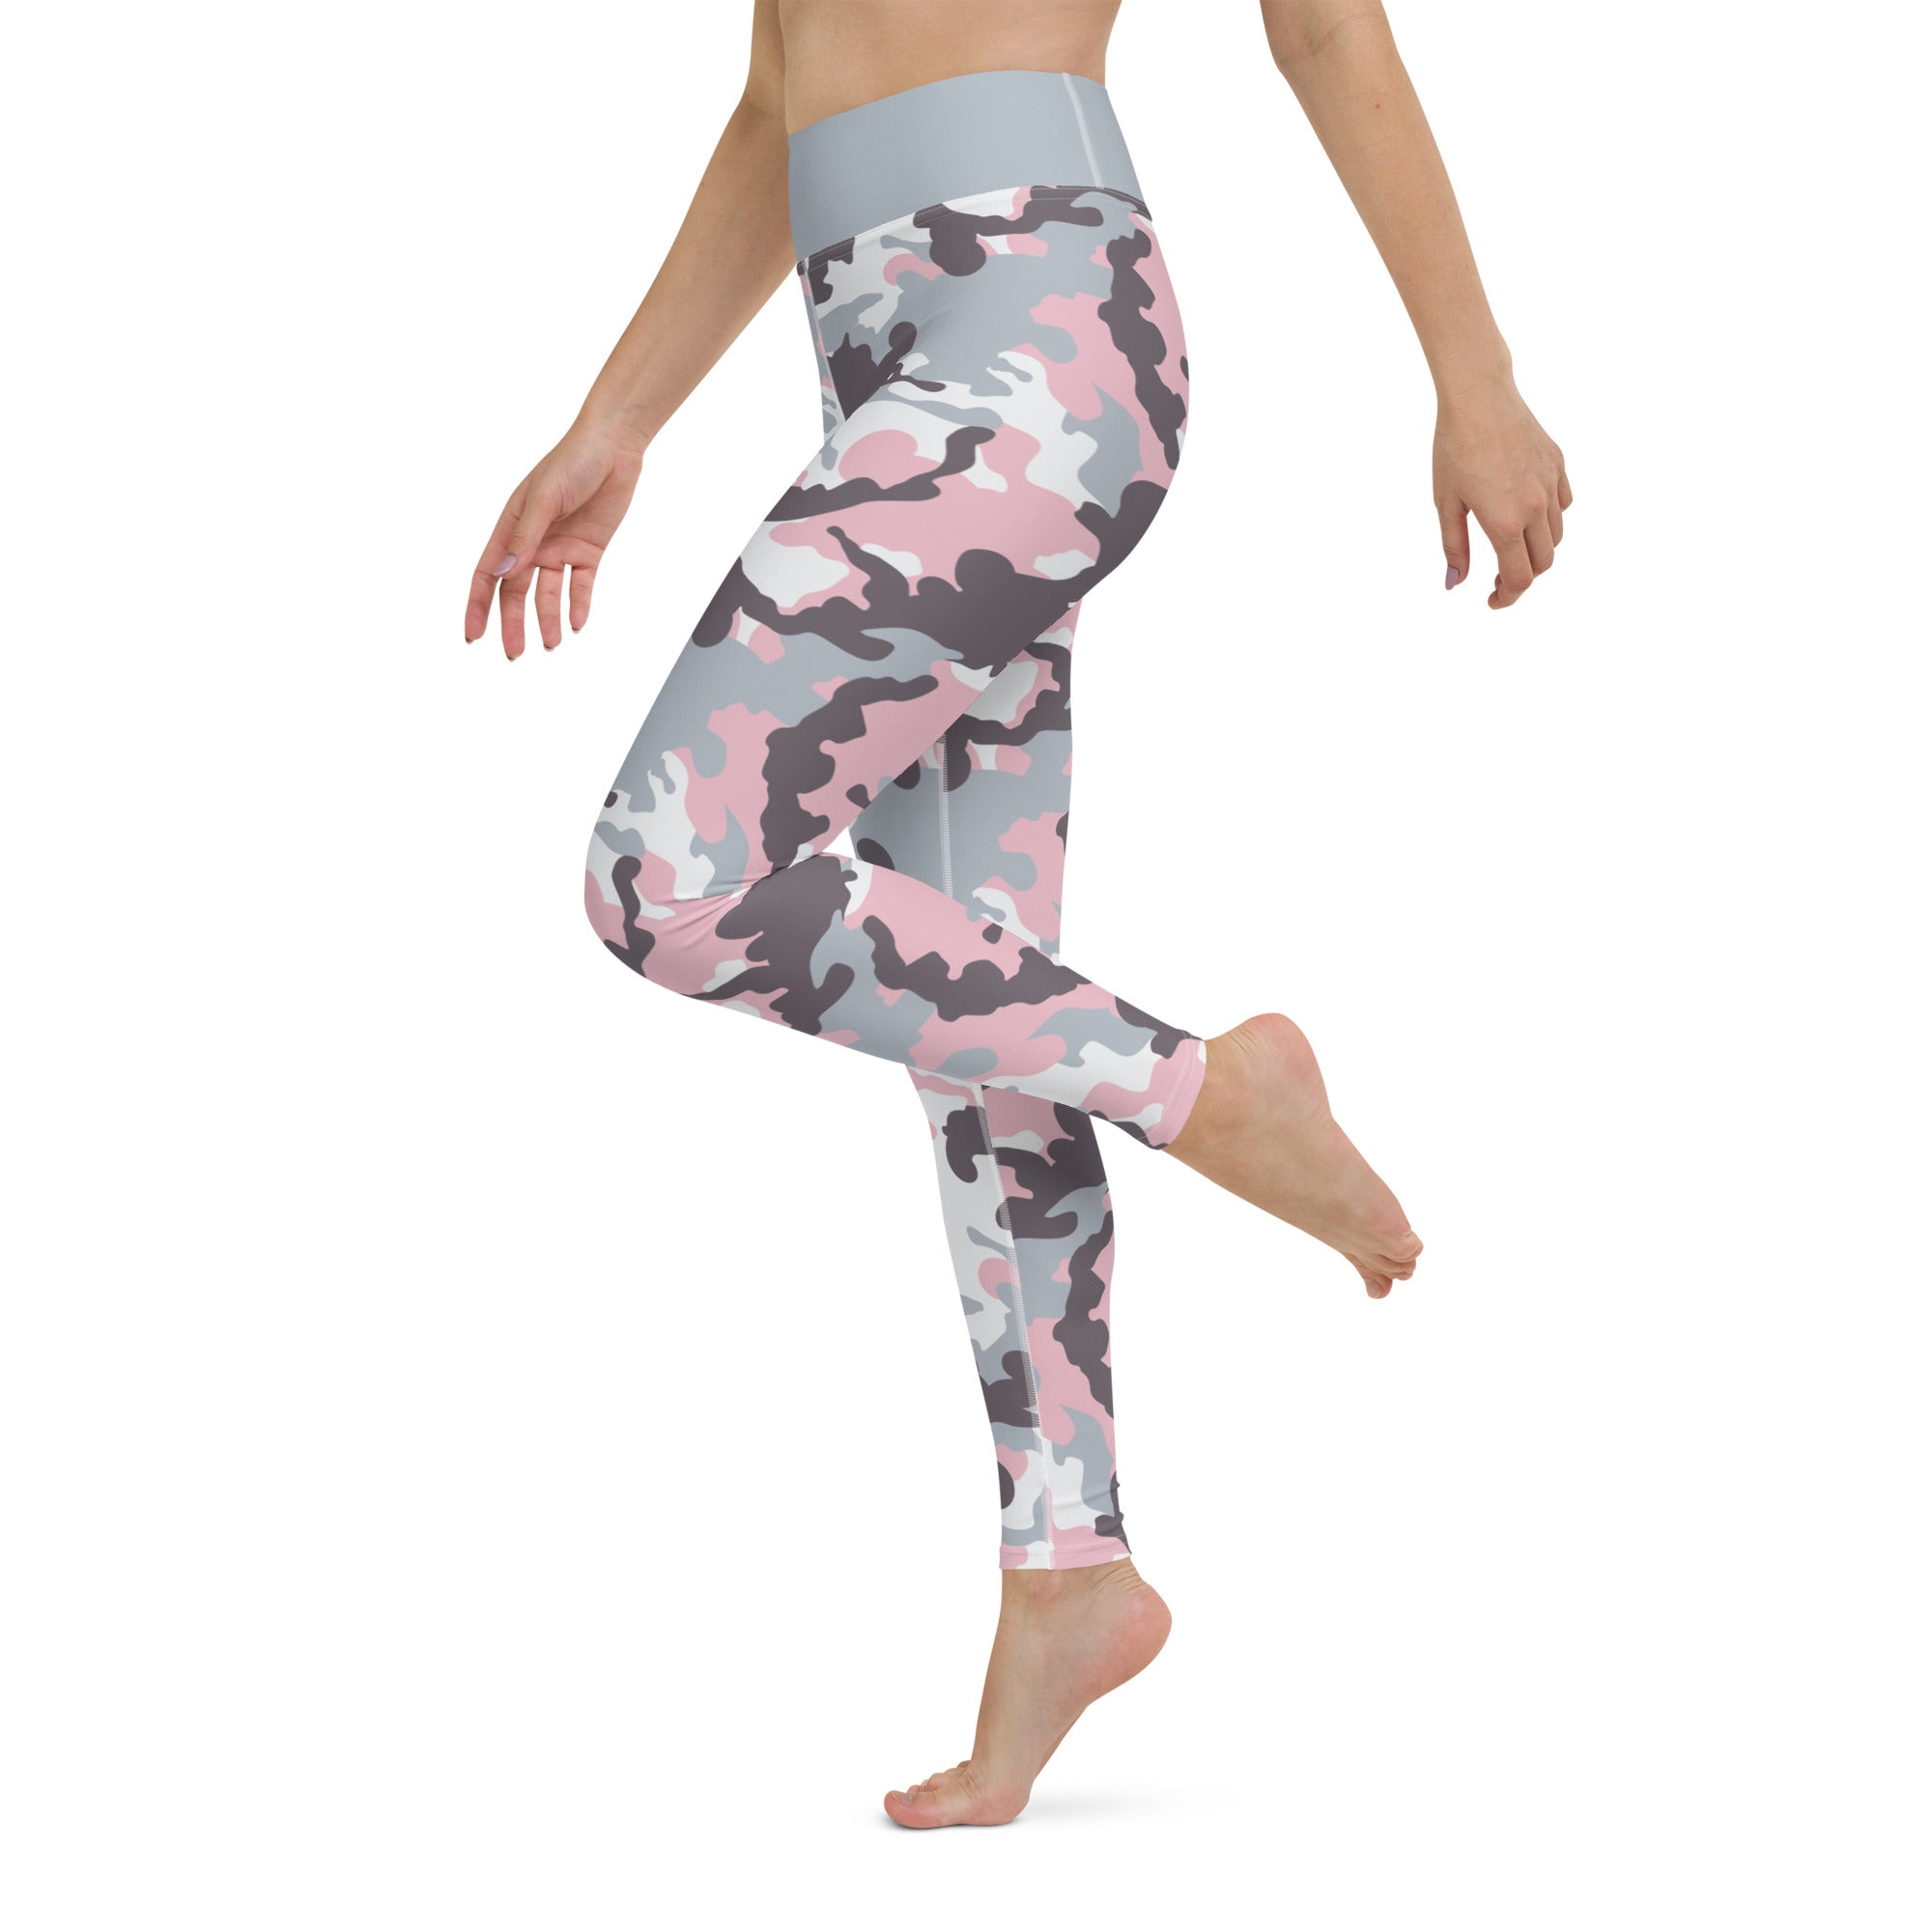 Yoga Leggings- Camo Pink and grey